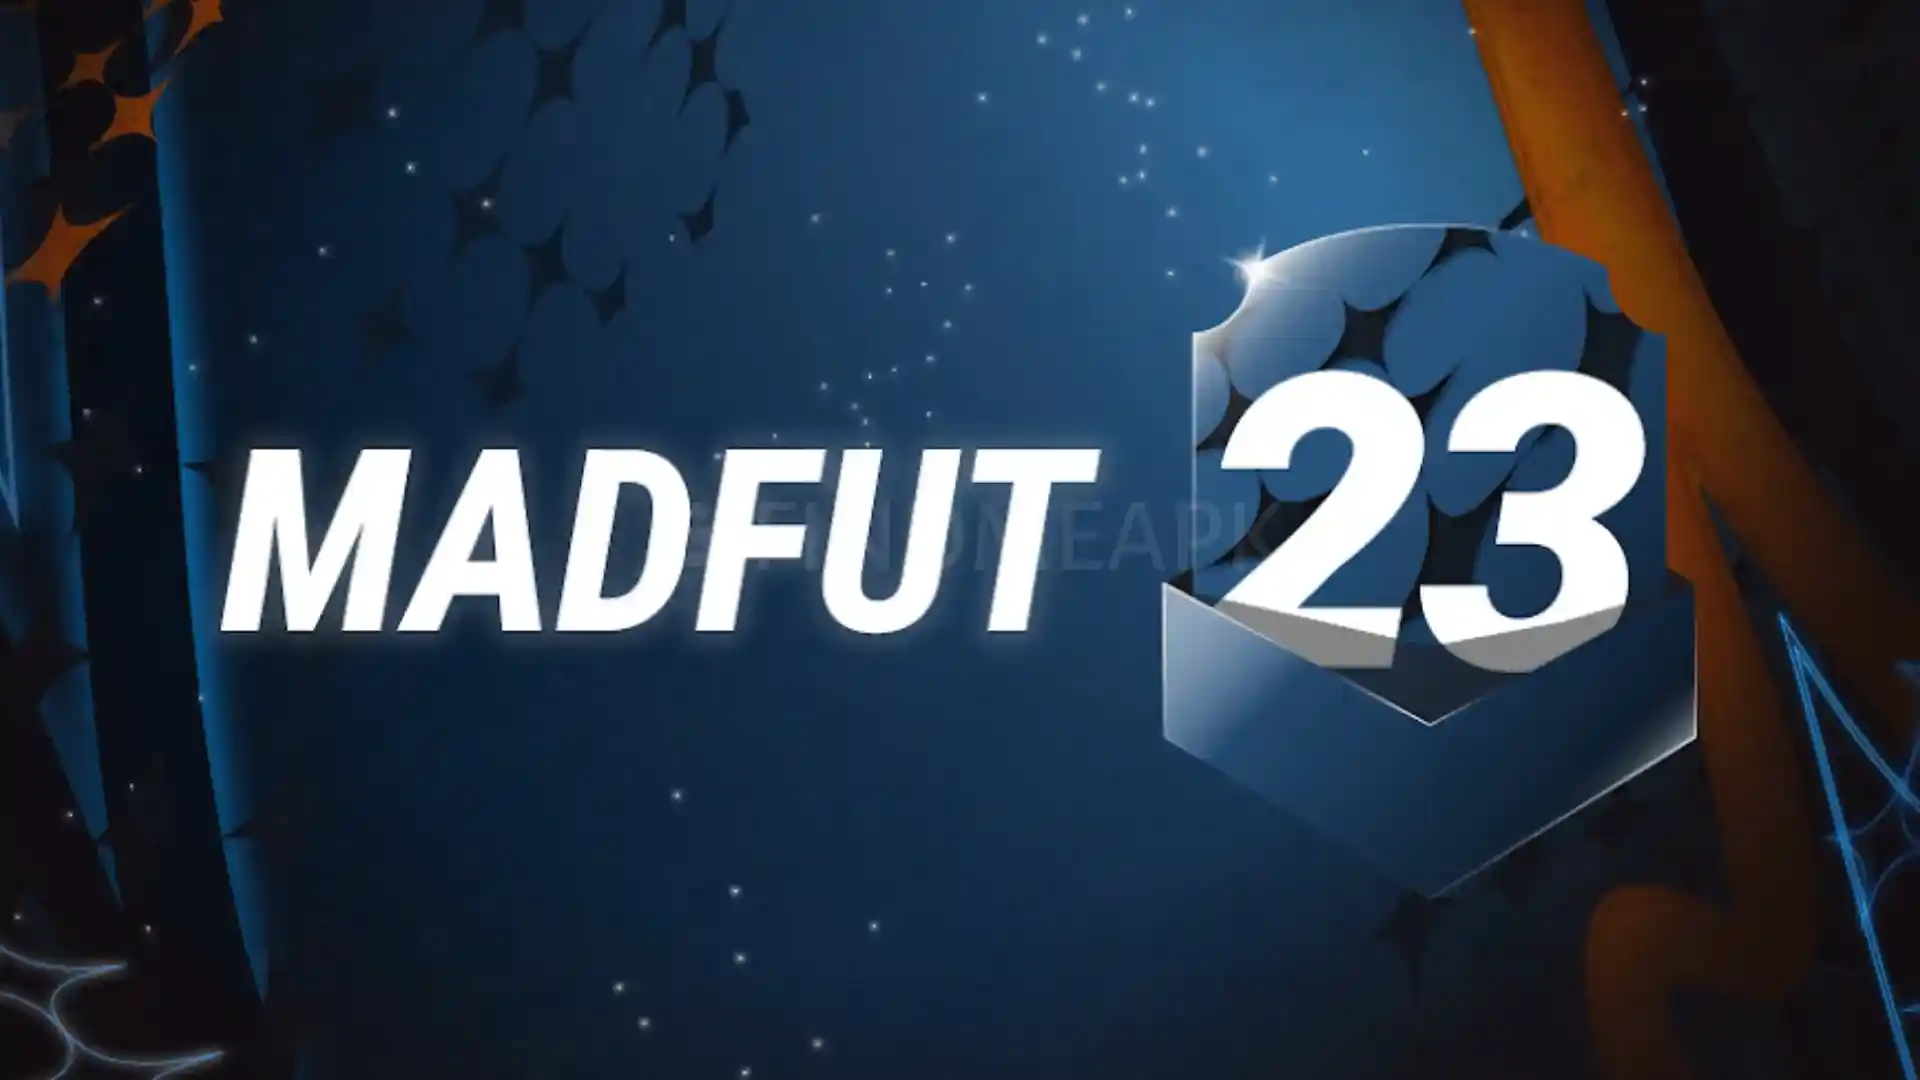 MADFUT 23 feature image